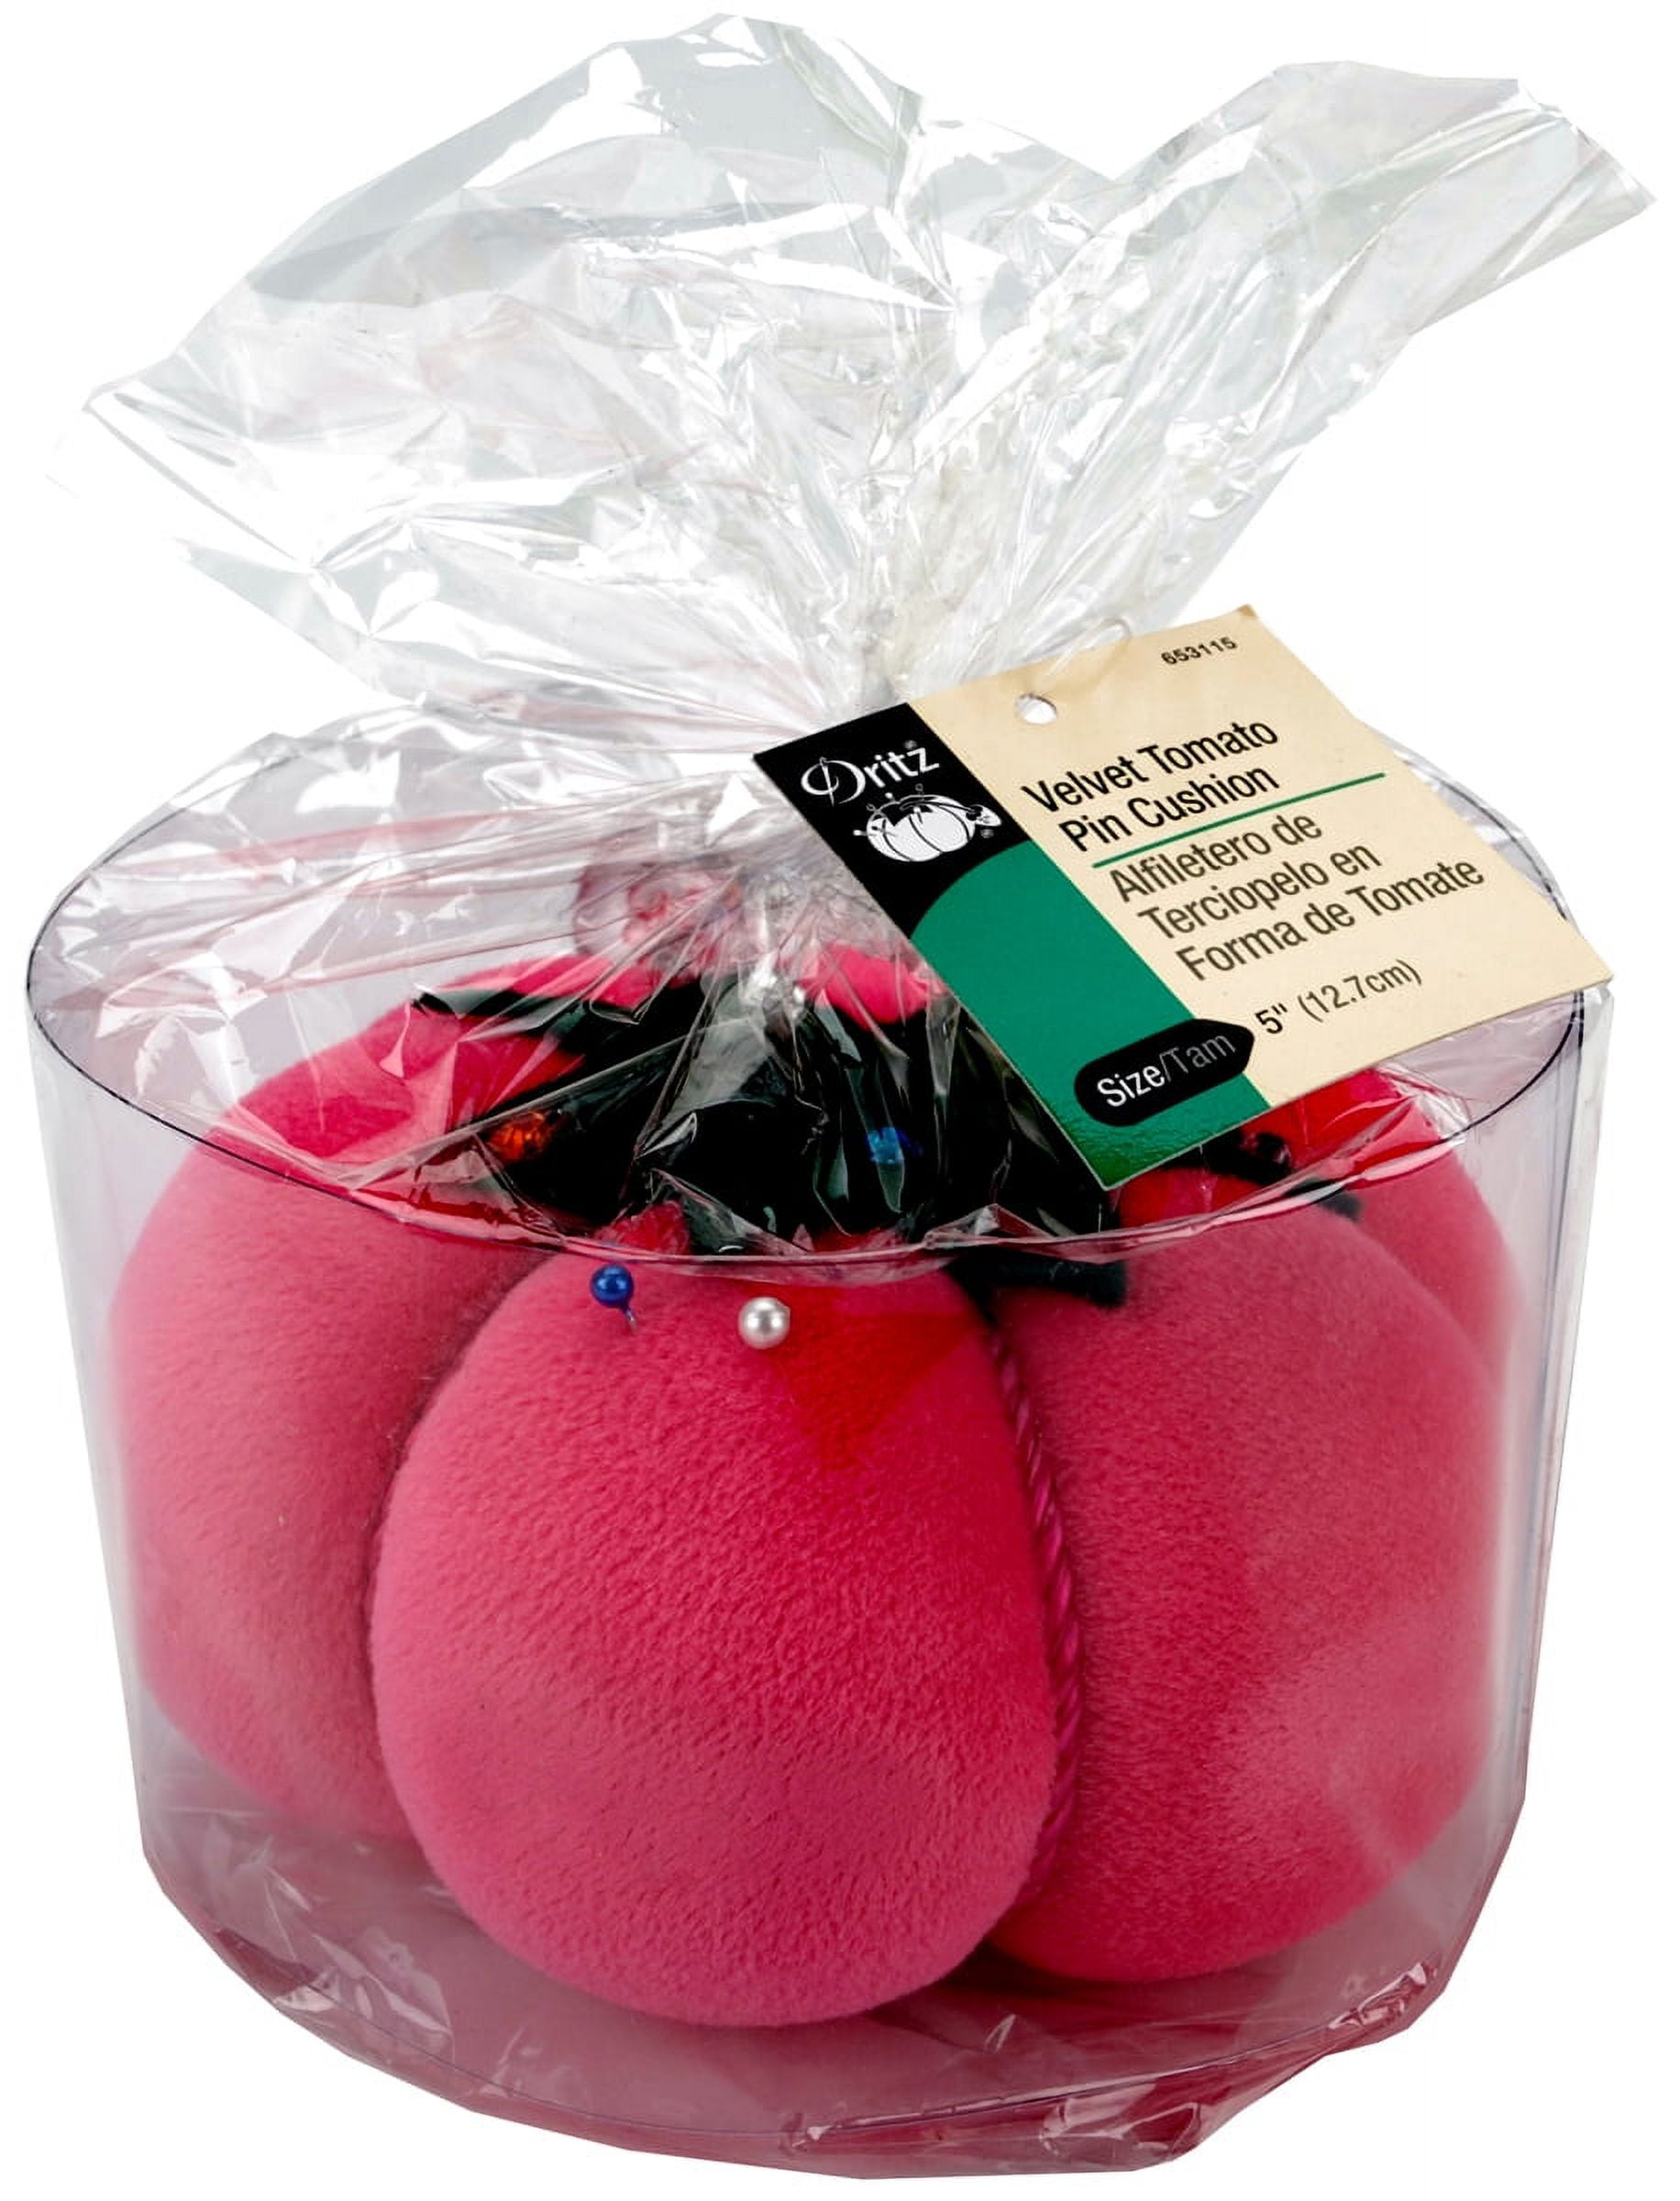 Personalized Pink Velvet Pincushion